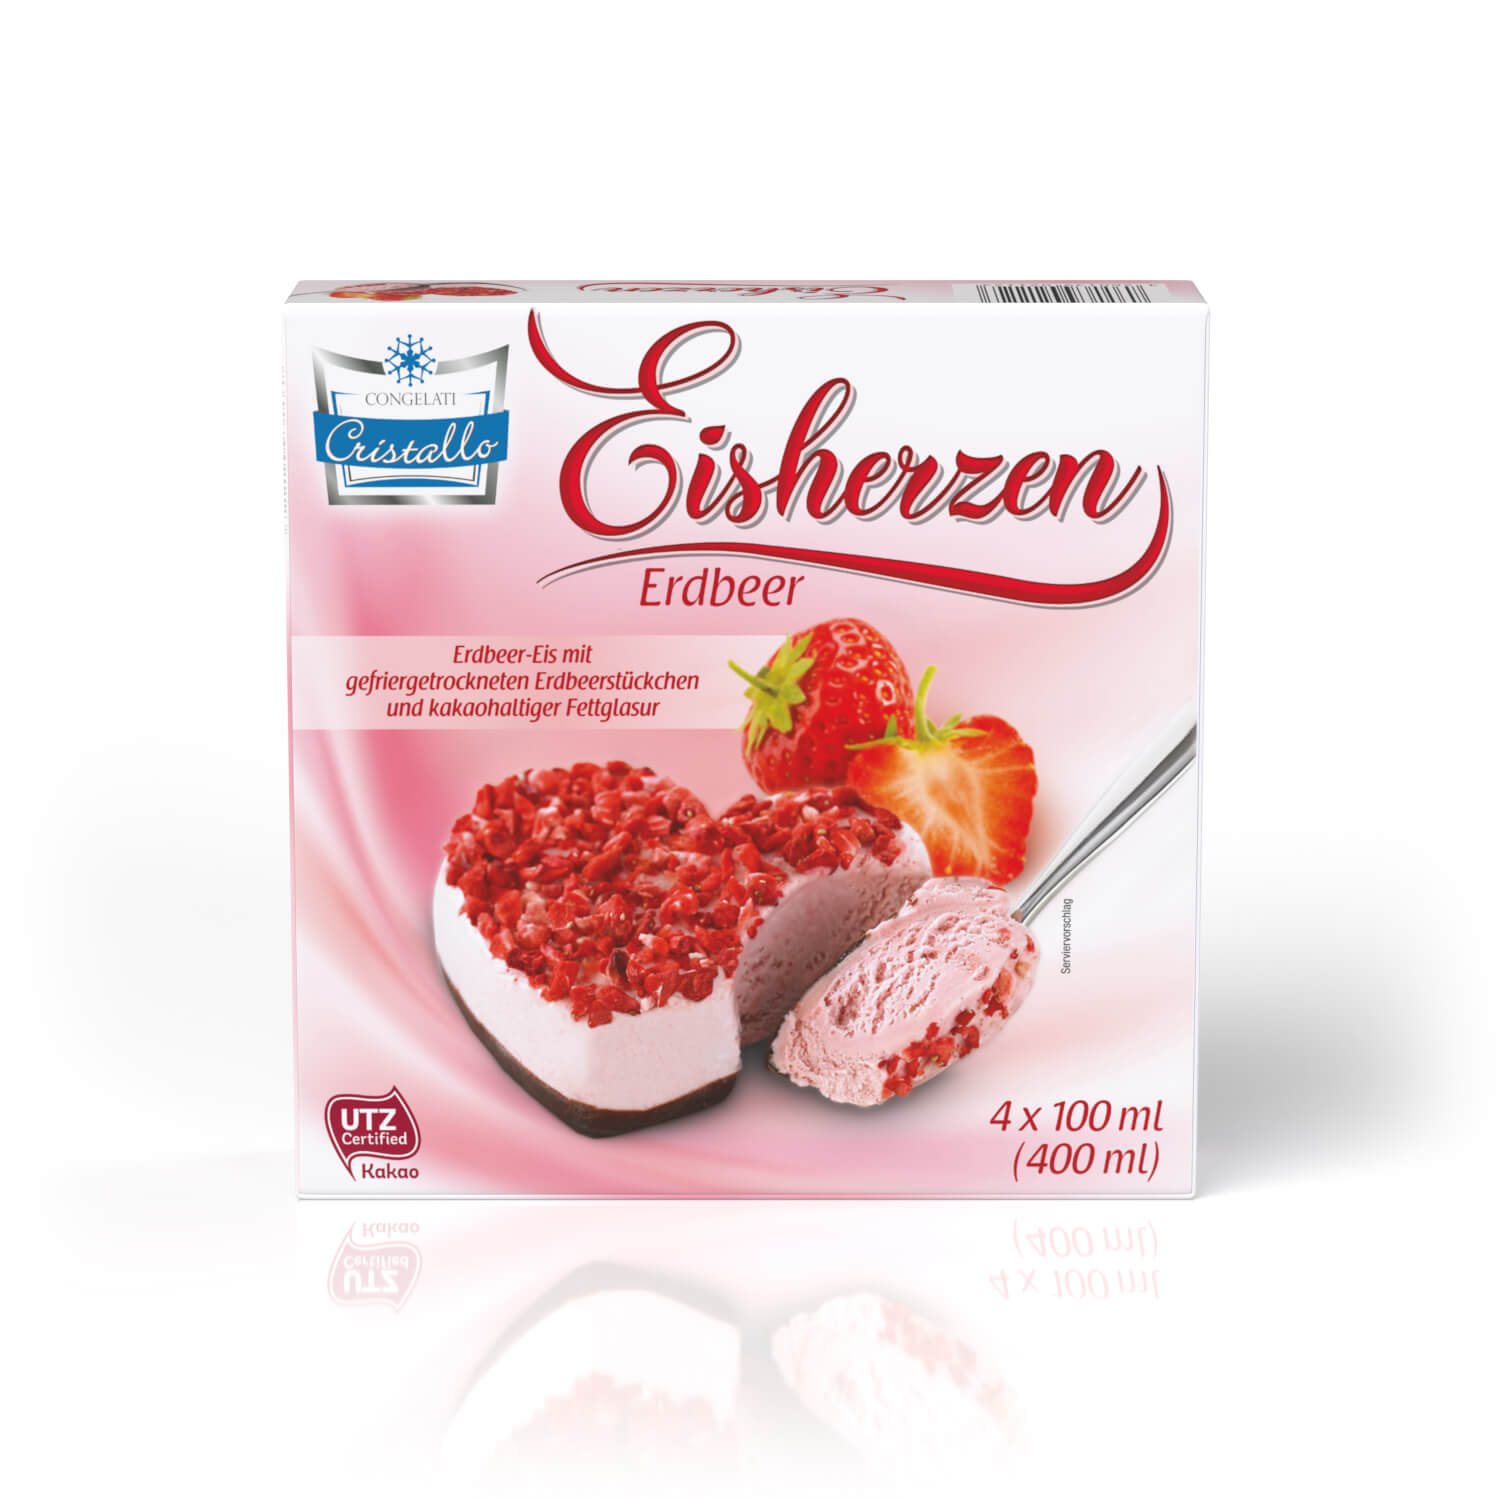 Cristallo Eisherzen Erdbeere 4 Stück